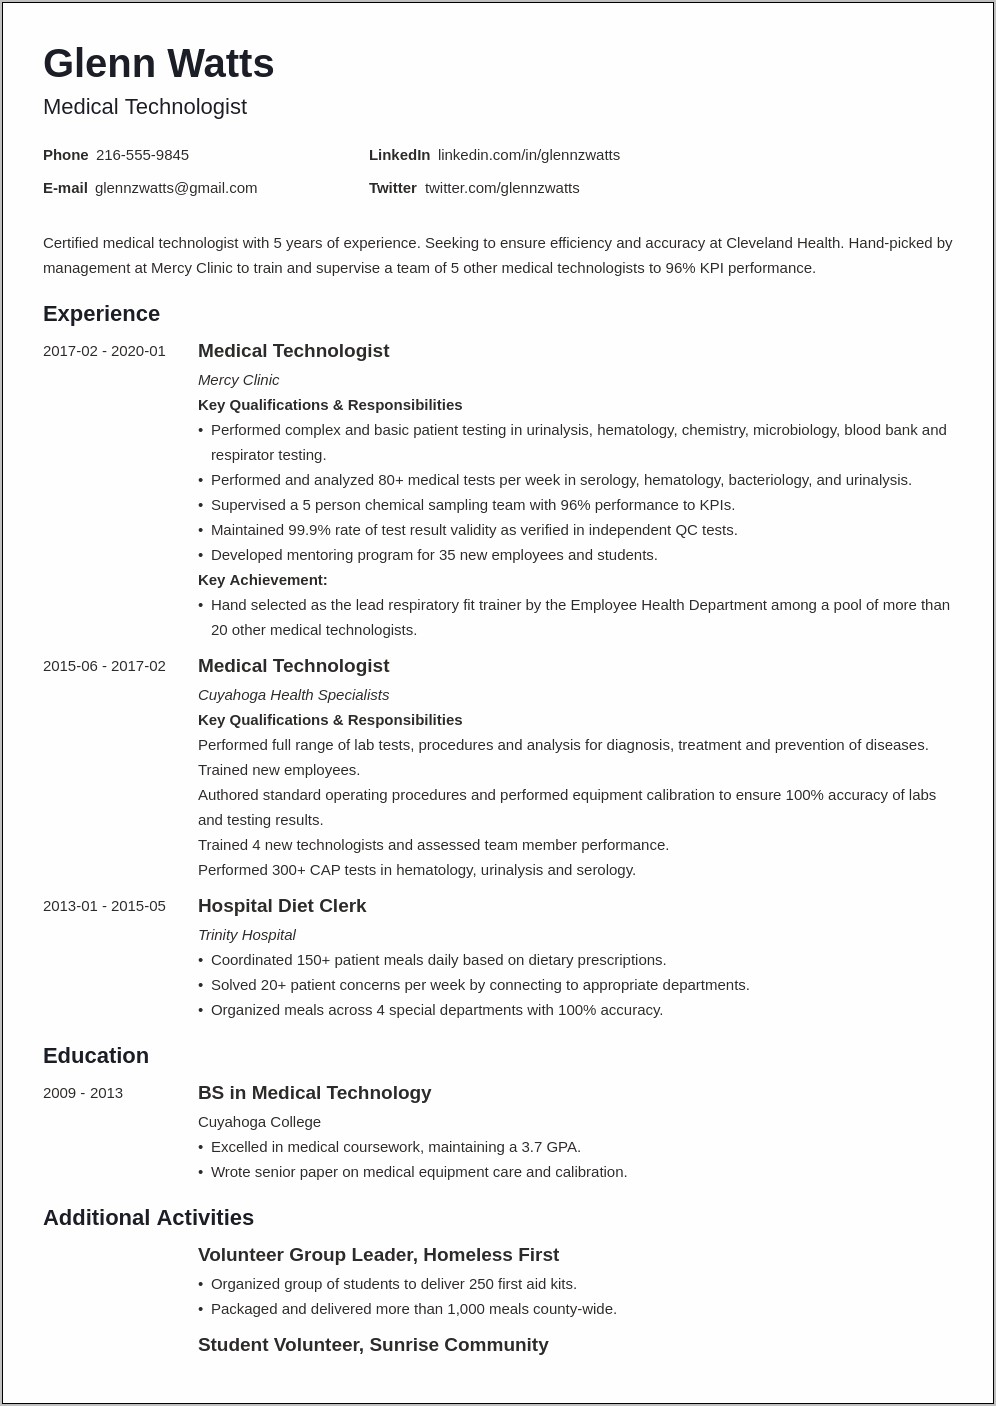 Sample Resume For Medical Technologist